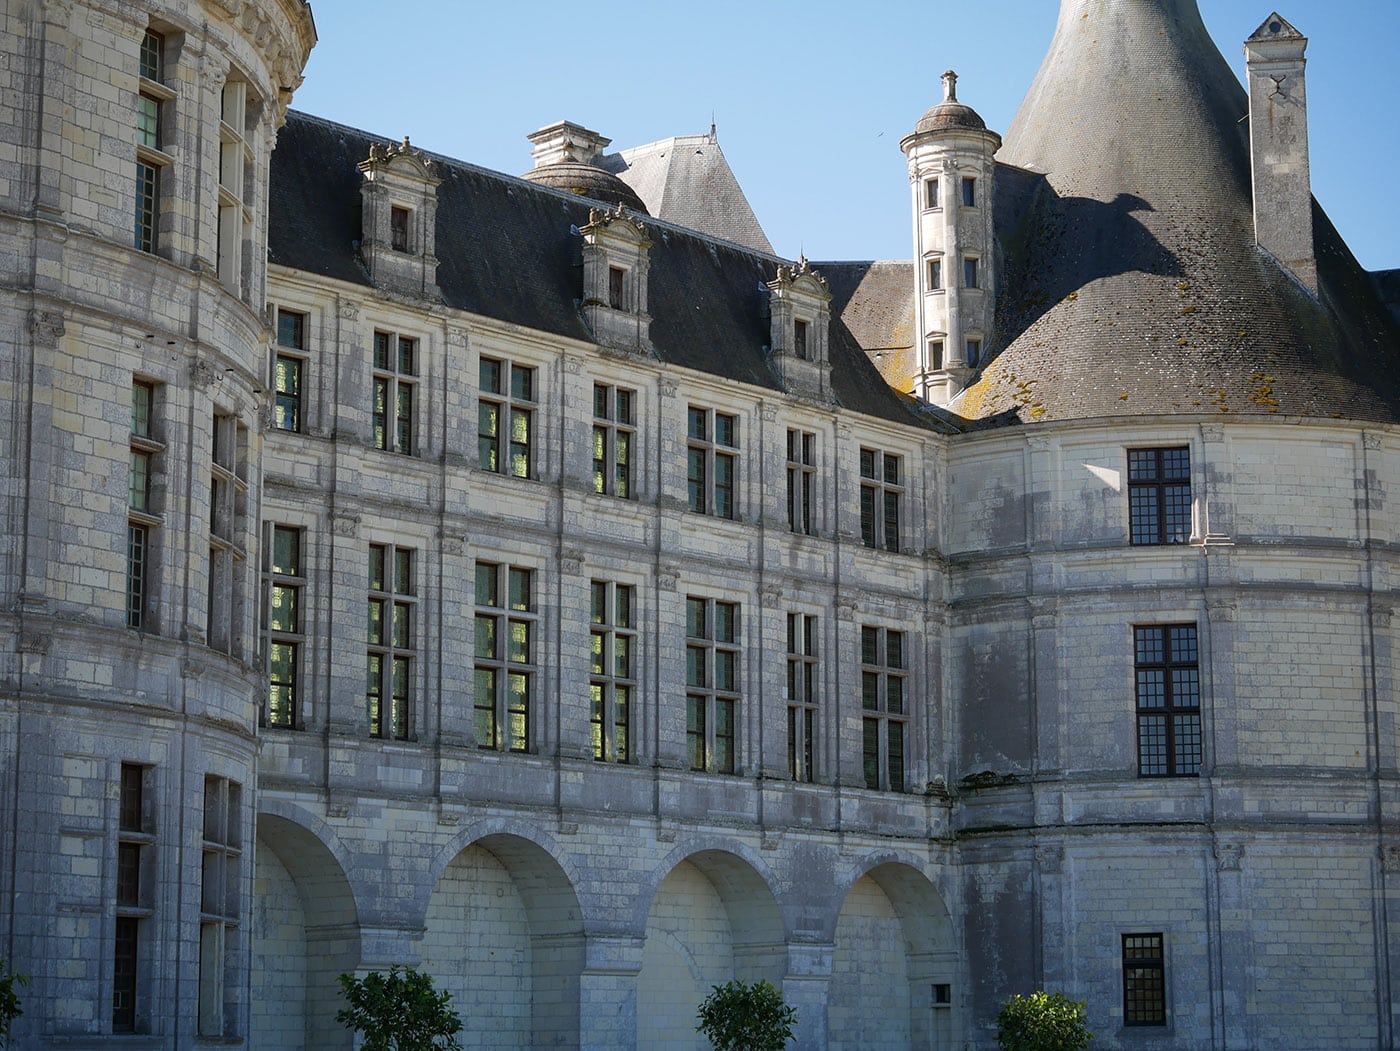 As history unfolds - Chambord Castle